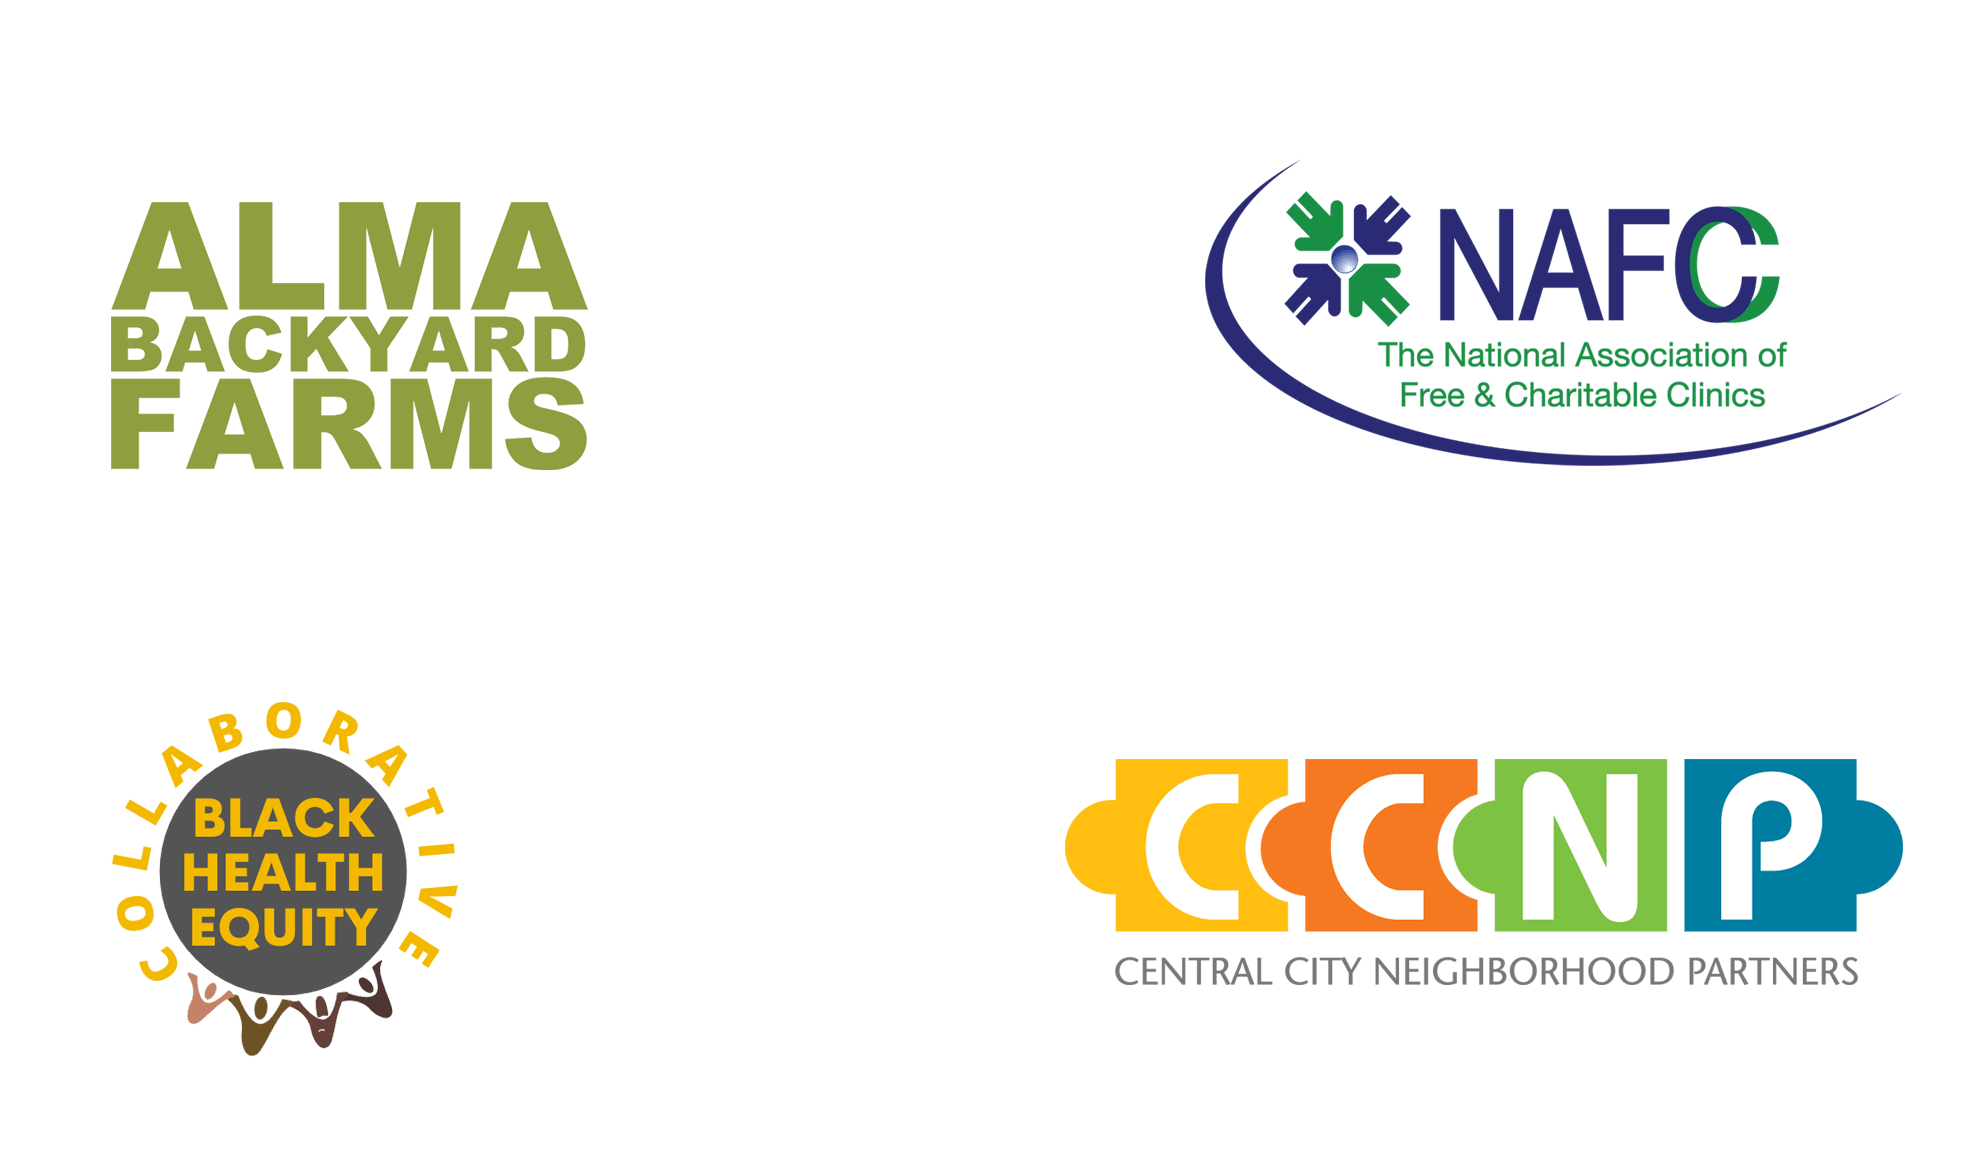 Community Partners: Alma Backyard Farms / NAFC / Black Helath Equity / CCNP 
pharmacy-logos-mobile-png
1971 px / 1159 px
56.40 kB